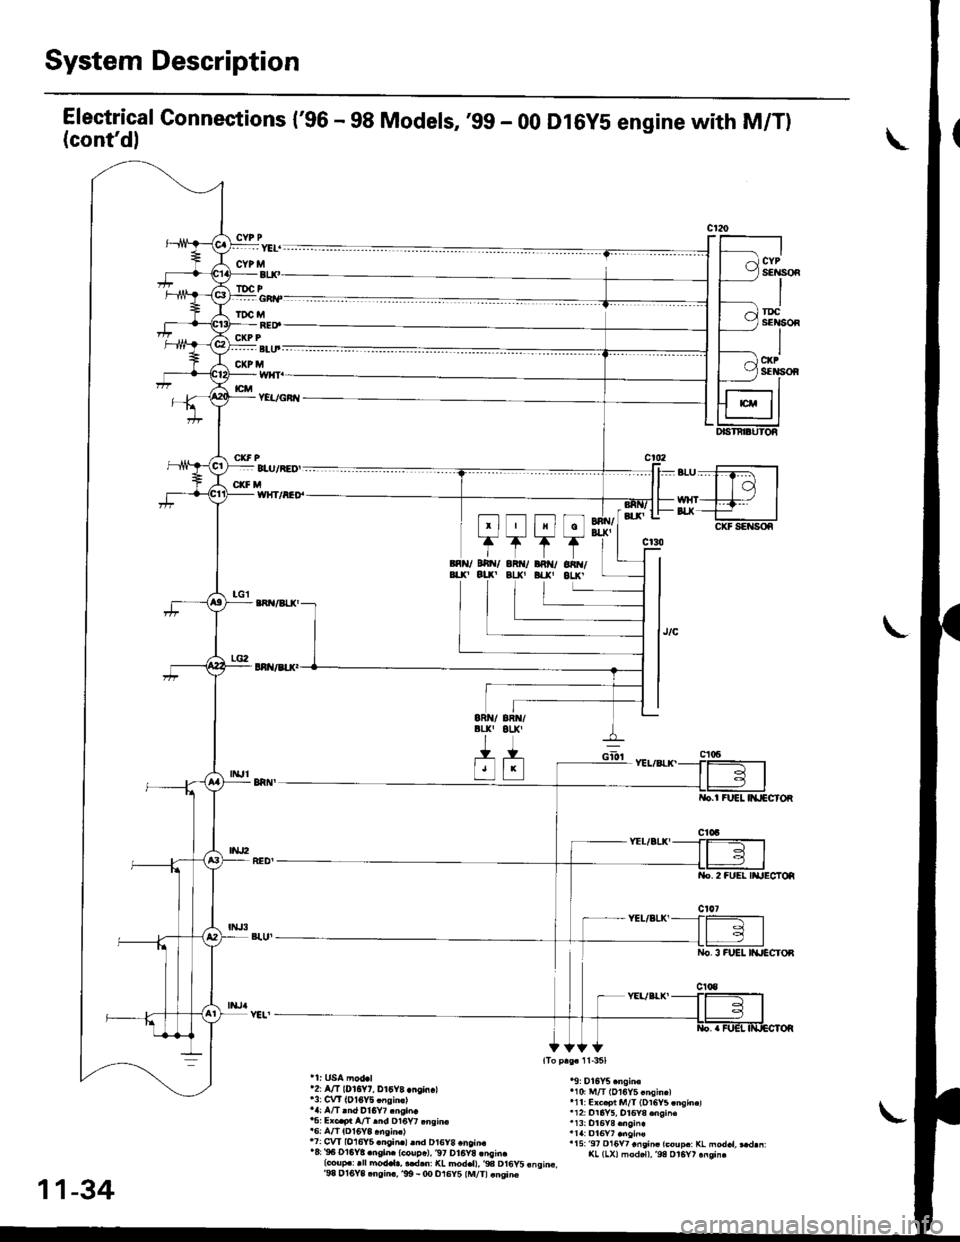 HONDA CIVIC 1997 6.G User Guide System Description
Electrical Connestions {96 - gB Models, ,99 - 00 Dl6yS engine with M/T)(contdl
rDic M
ct(P P
CXP M
RET
YEUGifl
CIG M
\
lhx/ALJ(I
&llAL:]
12: A/t tD16Yt, Dt0Y8.ncin.t13: C1/t lDt